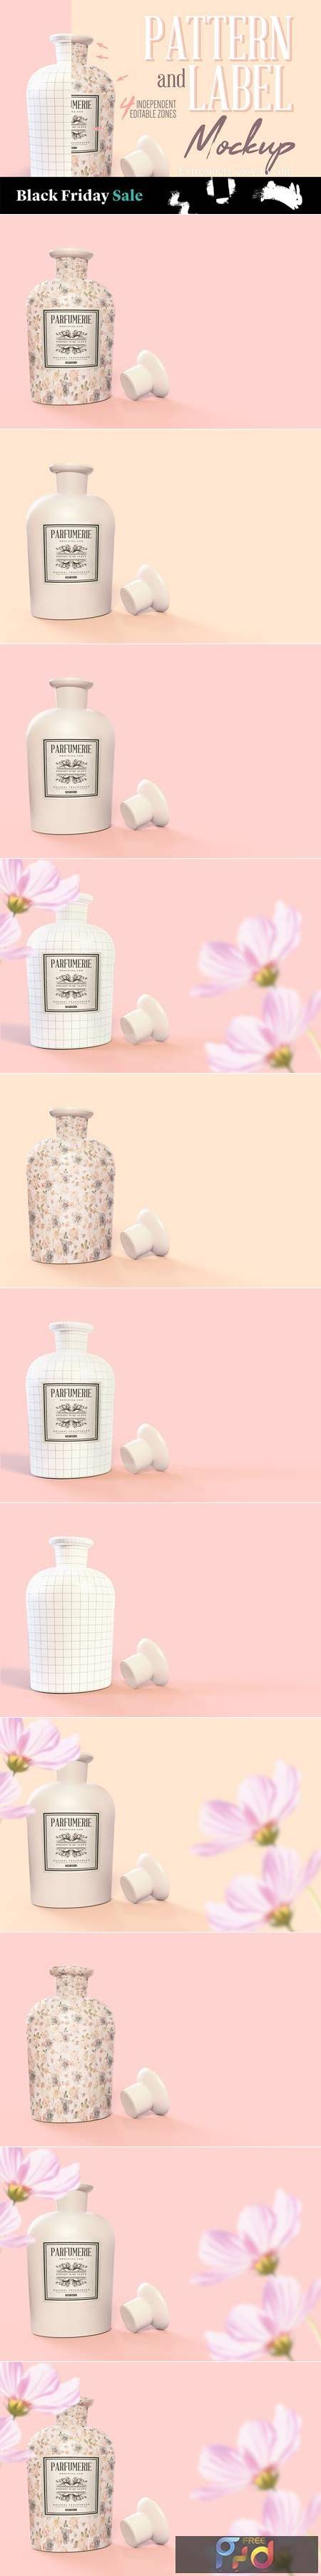 Pattern & Label Parfum Bottle Mockup